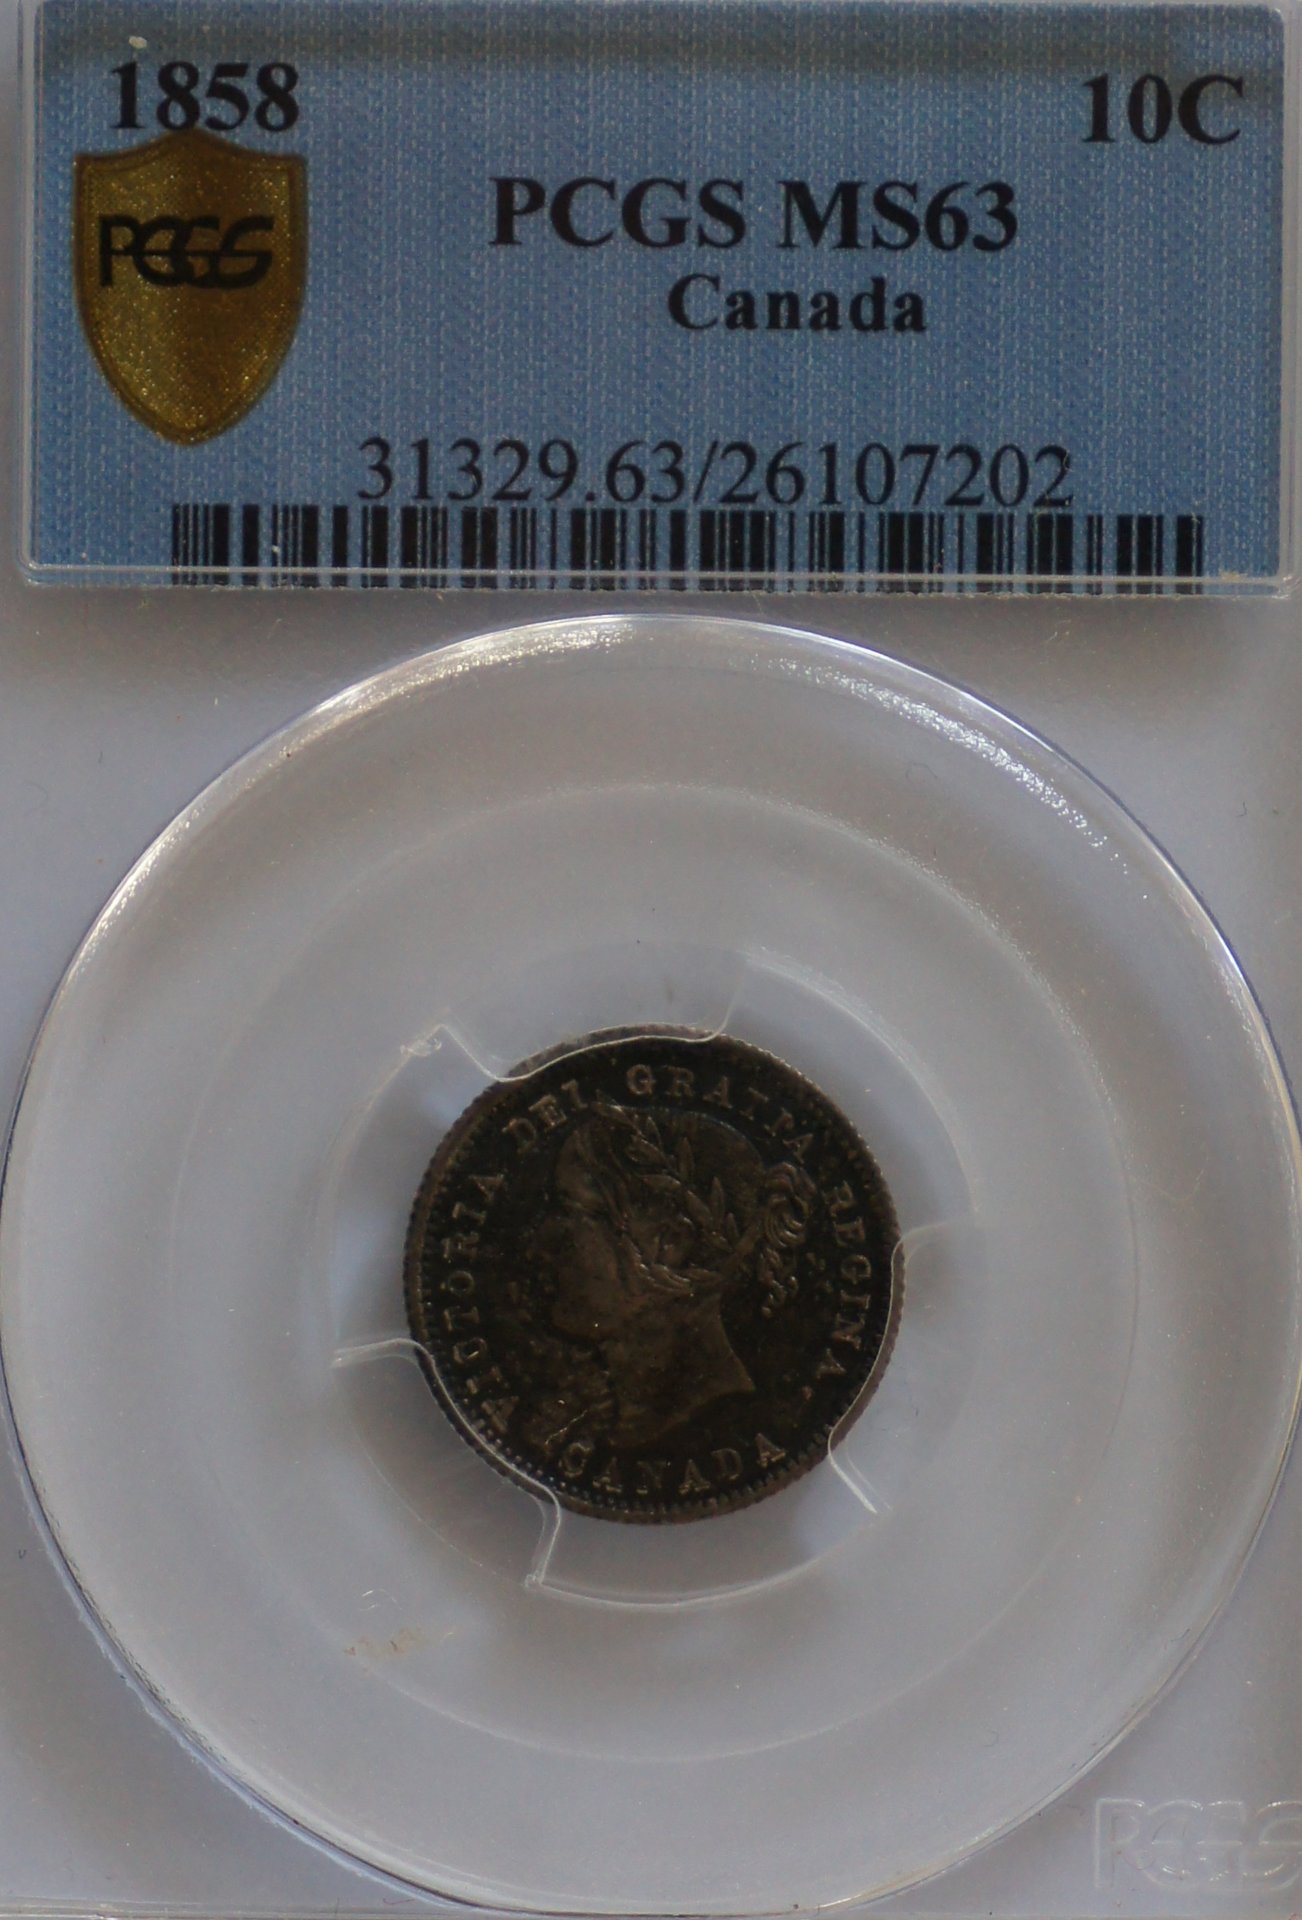 Canada 1858 10c.JPG